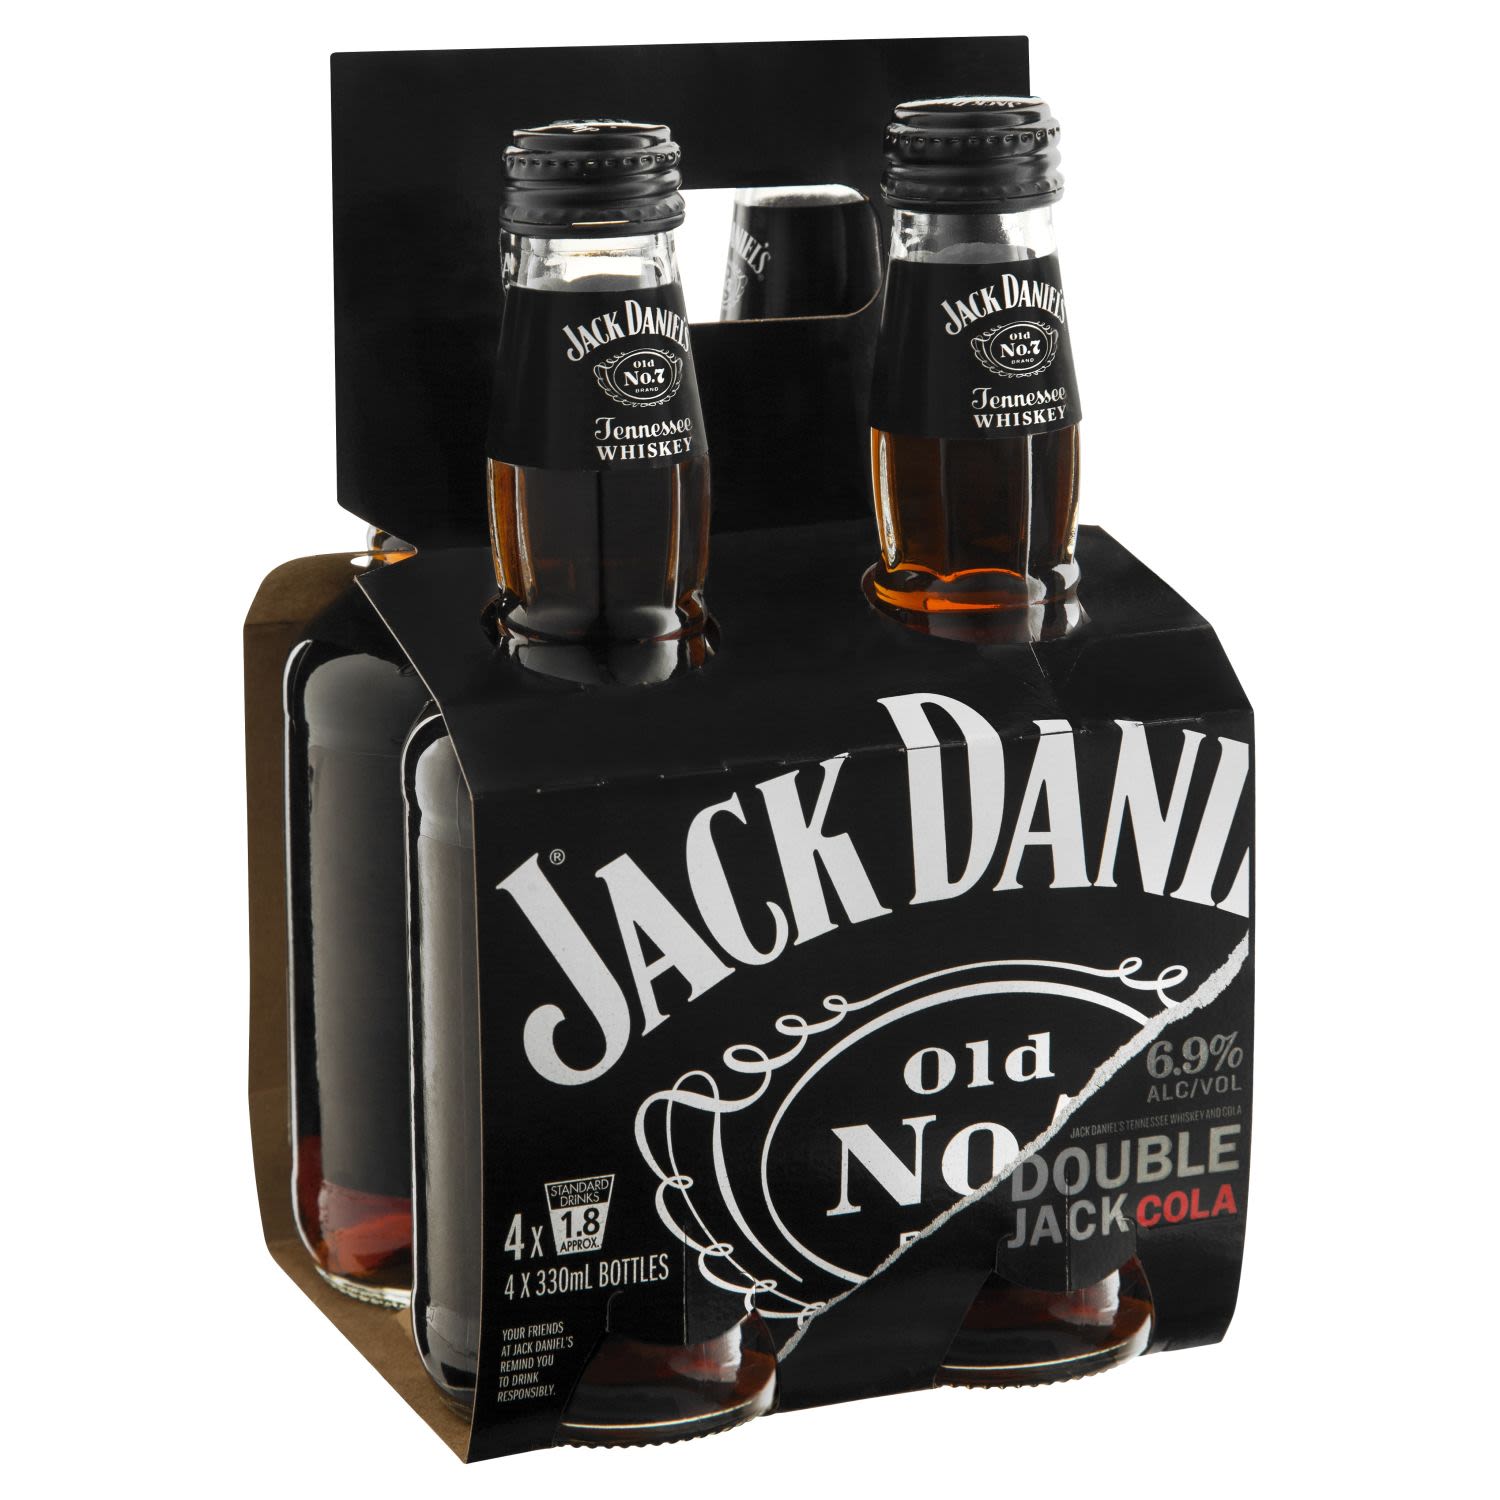 Jack Daniel's Double Jack & Cola Bottle 330mL 4 Pack